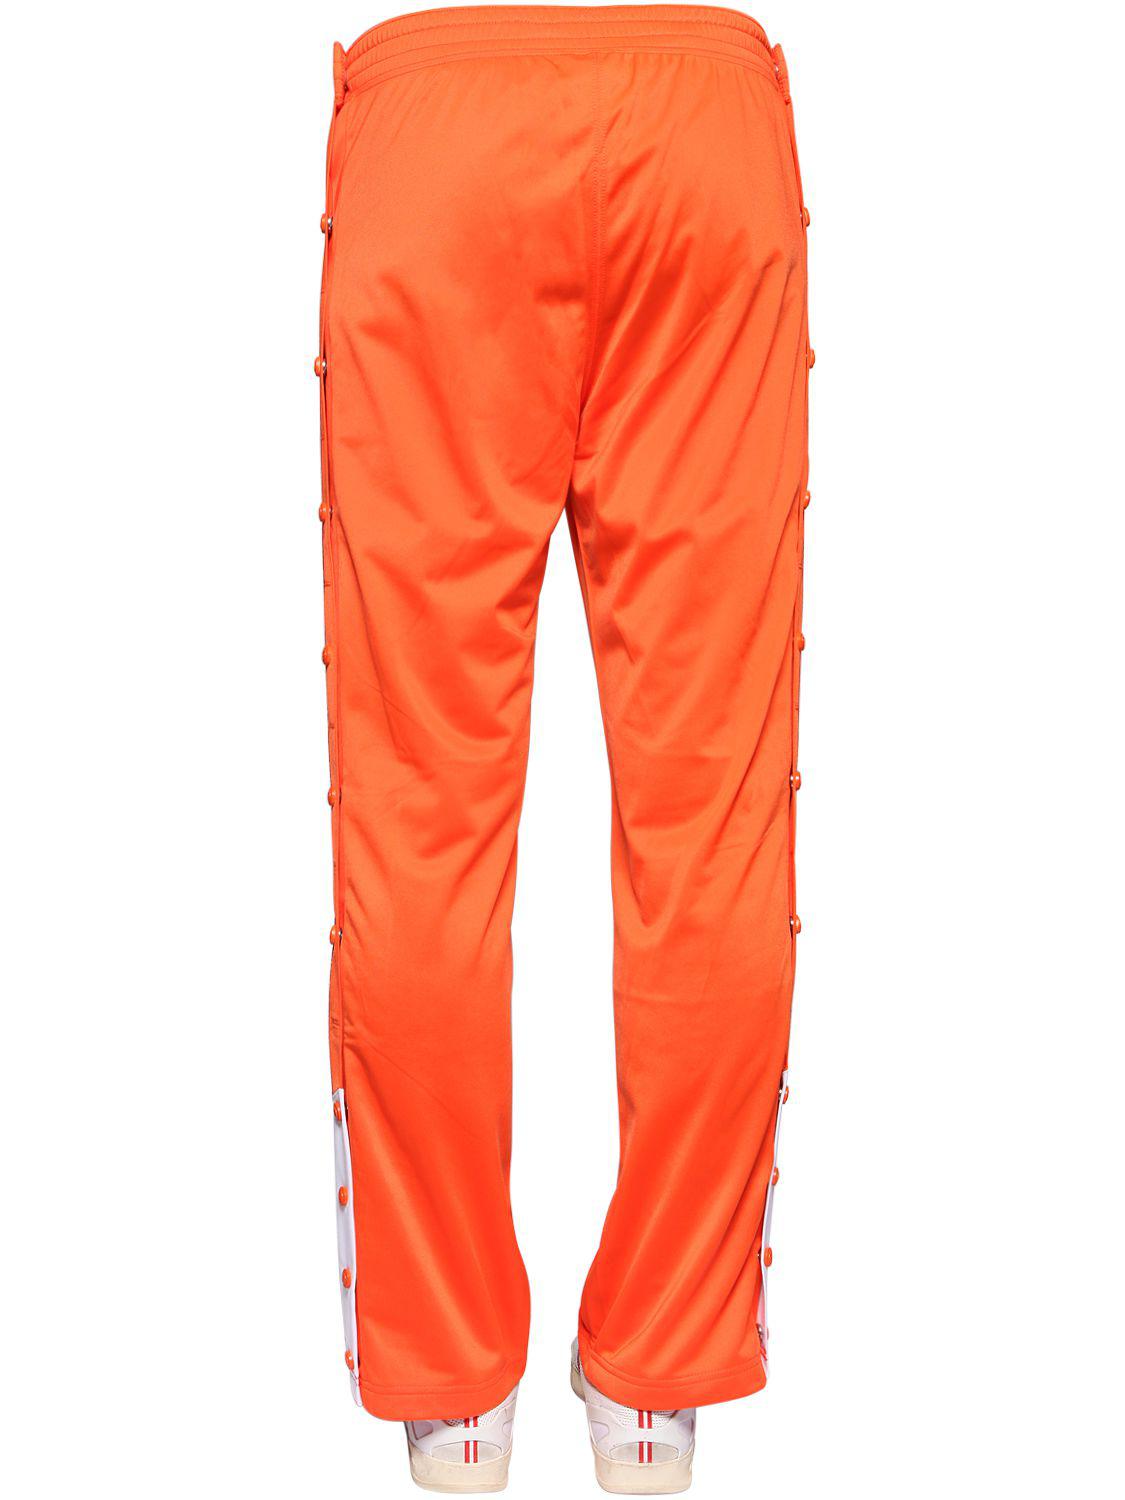 Champion Synthetic Nylon Tear Away Track Pants in Orange for Men - Lyst